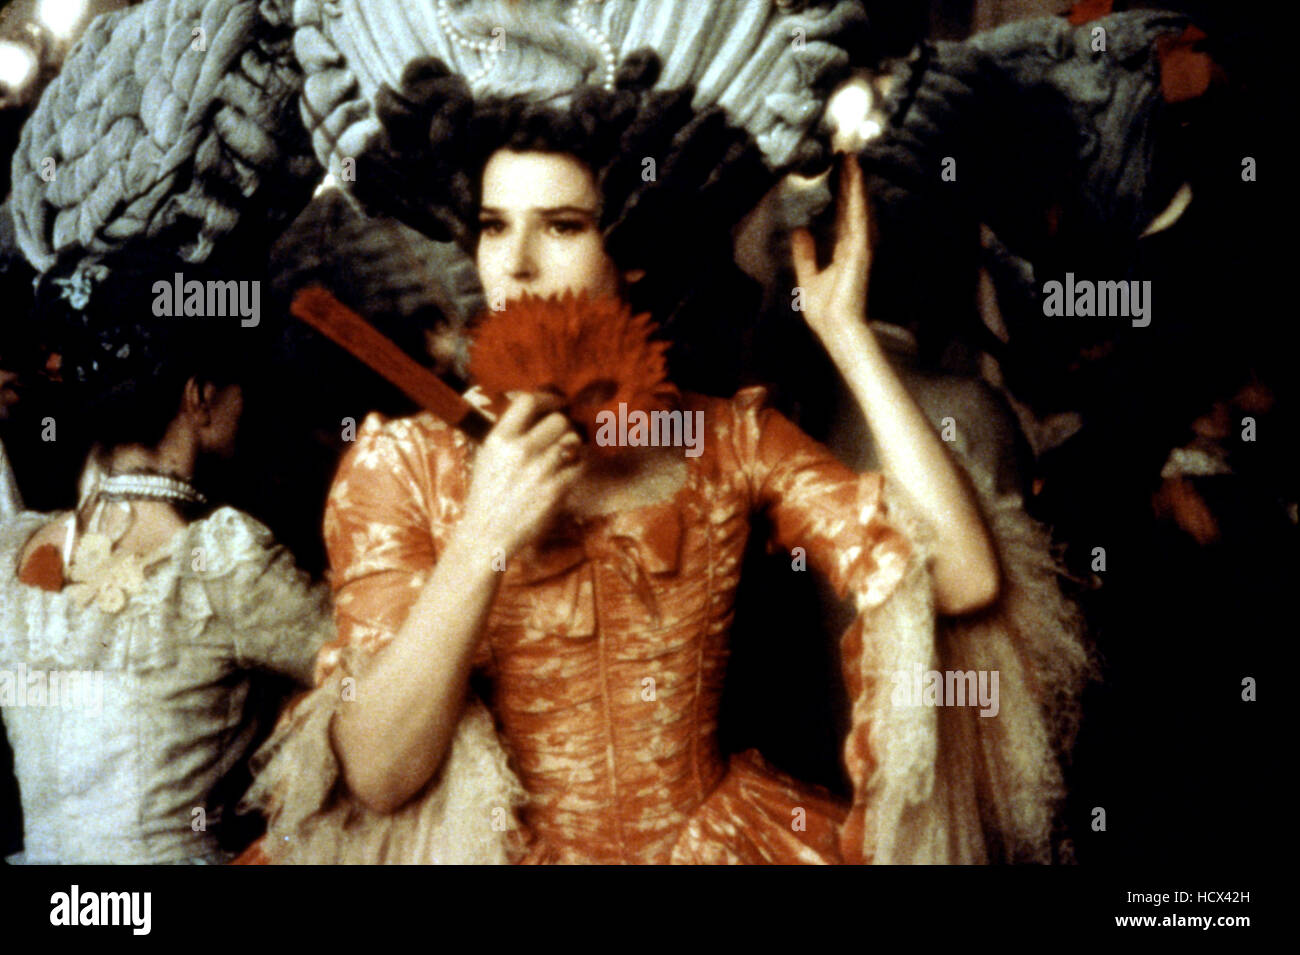 RIDICULE, Fanny Ardant, 1996 Stock Photo